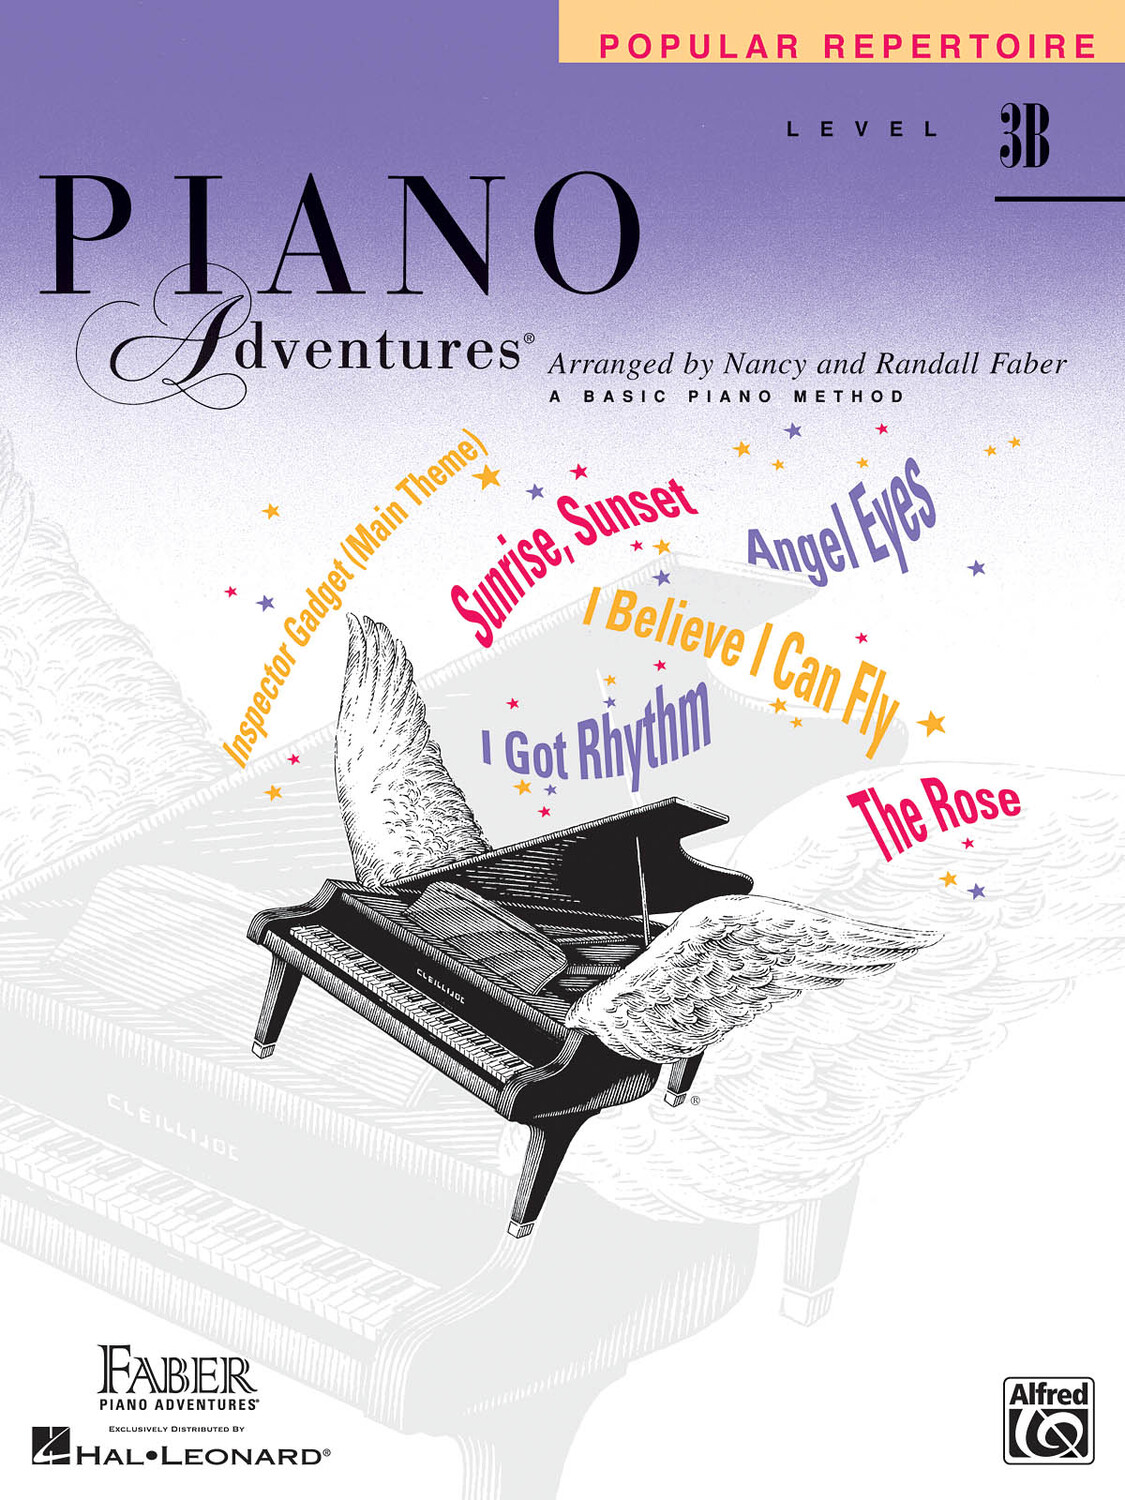 Cover: 674398207732 | Piano Adventures Popular Repertoire Book Level 3B | EAN 0674398207732